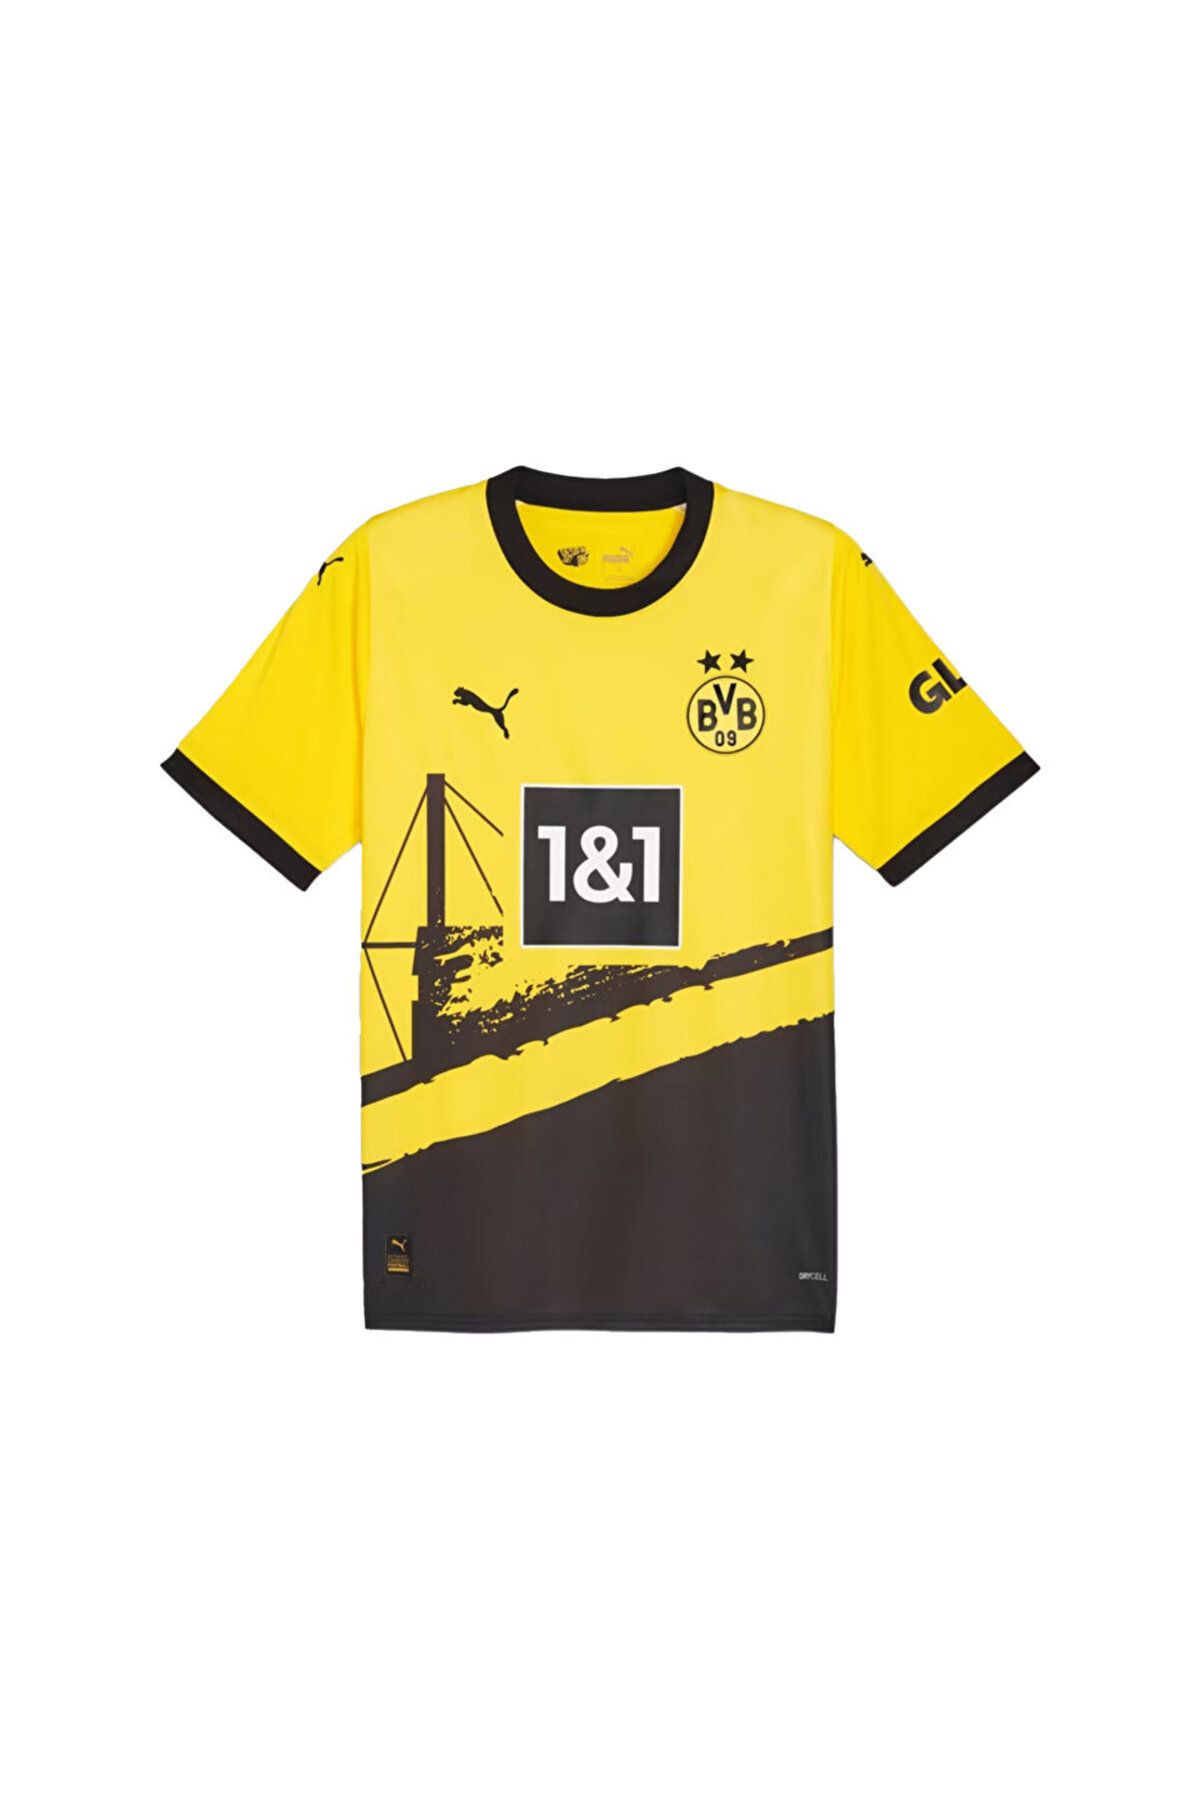 Puma Bvb Home Jersey Erkek Futbol Borussia Dortmund Forması 77060401 Sarı